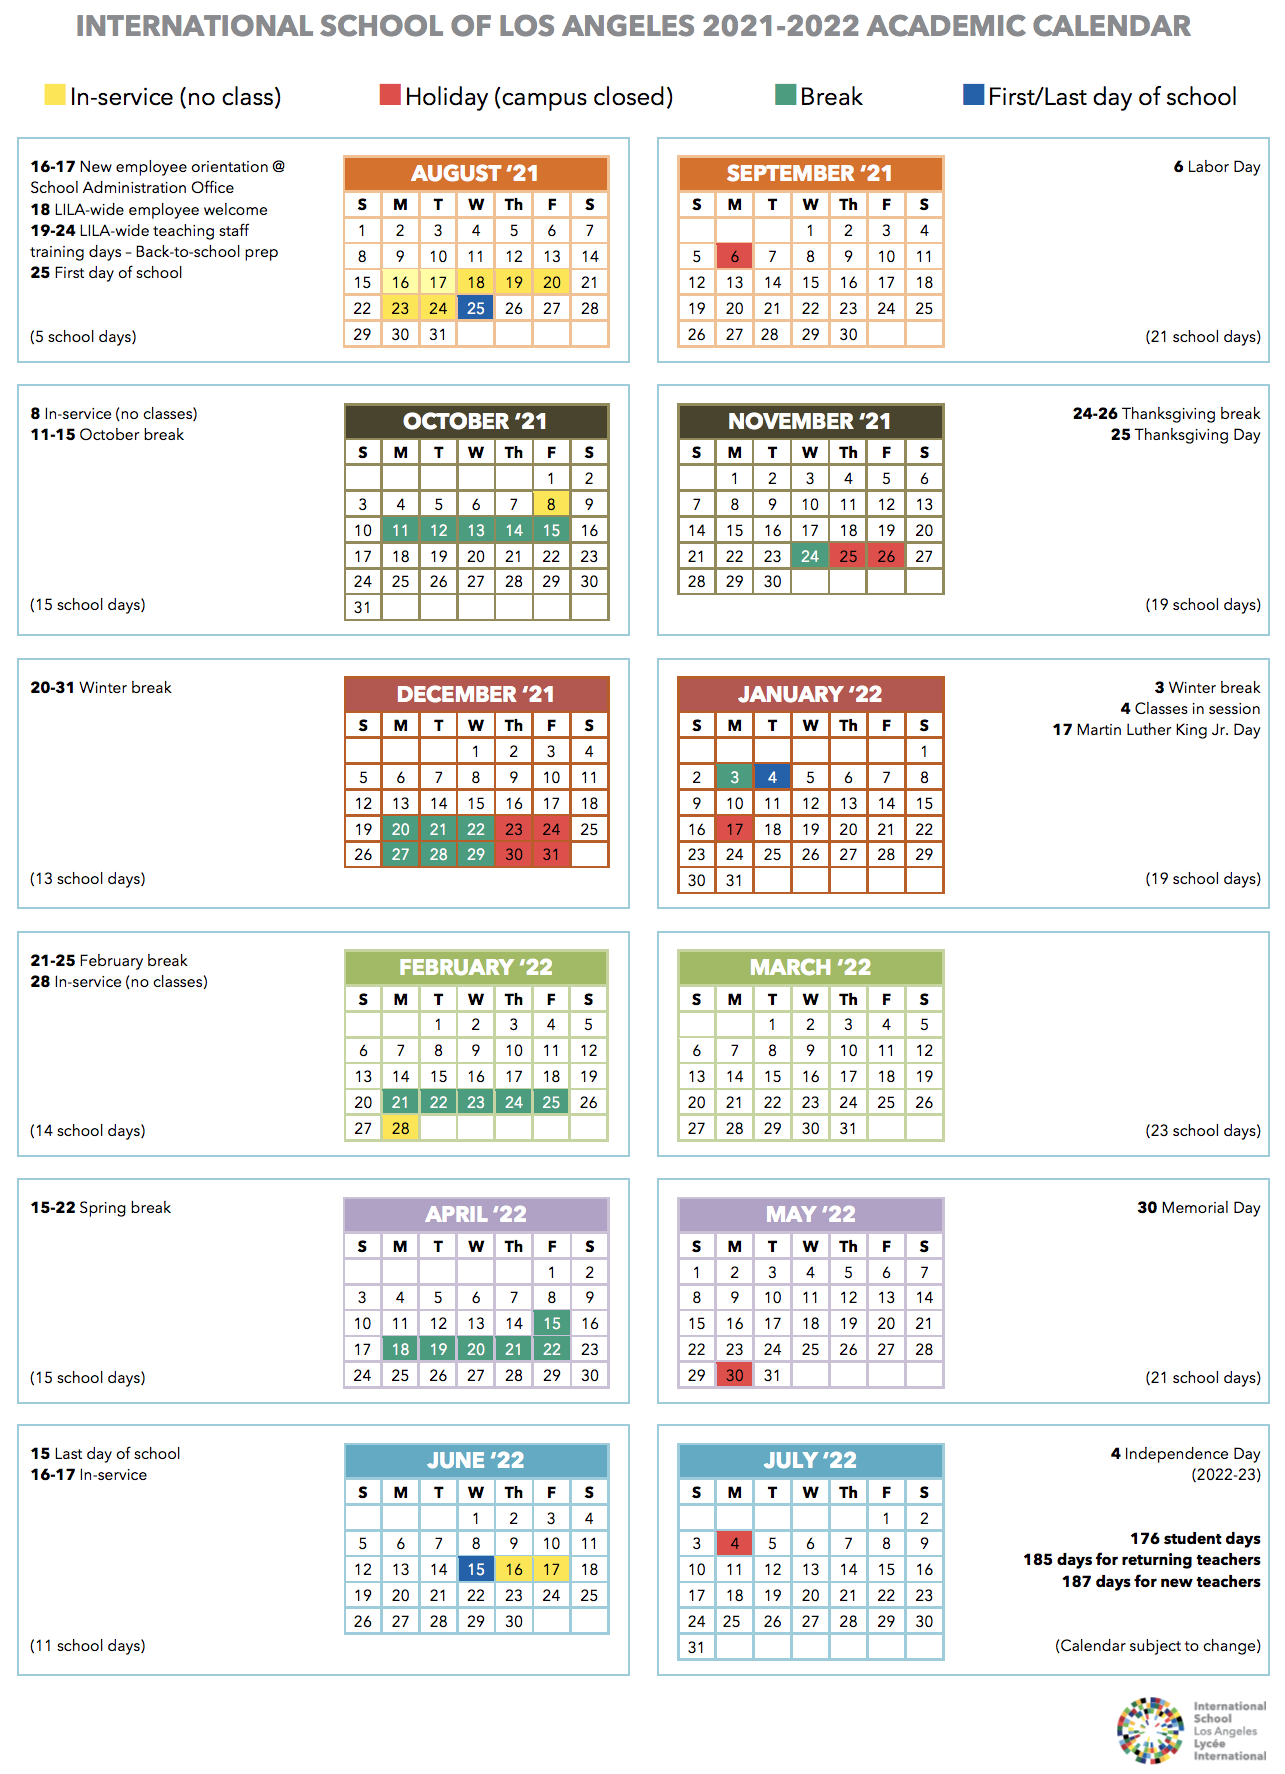 Csulb Academic Calendar 2022 23 Calendar | International School Of Los Angeles